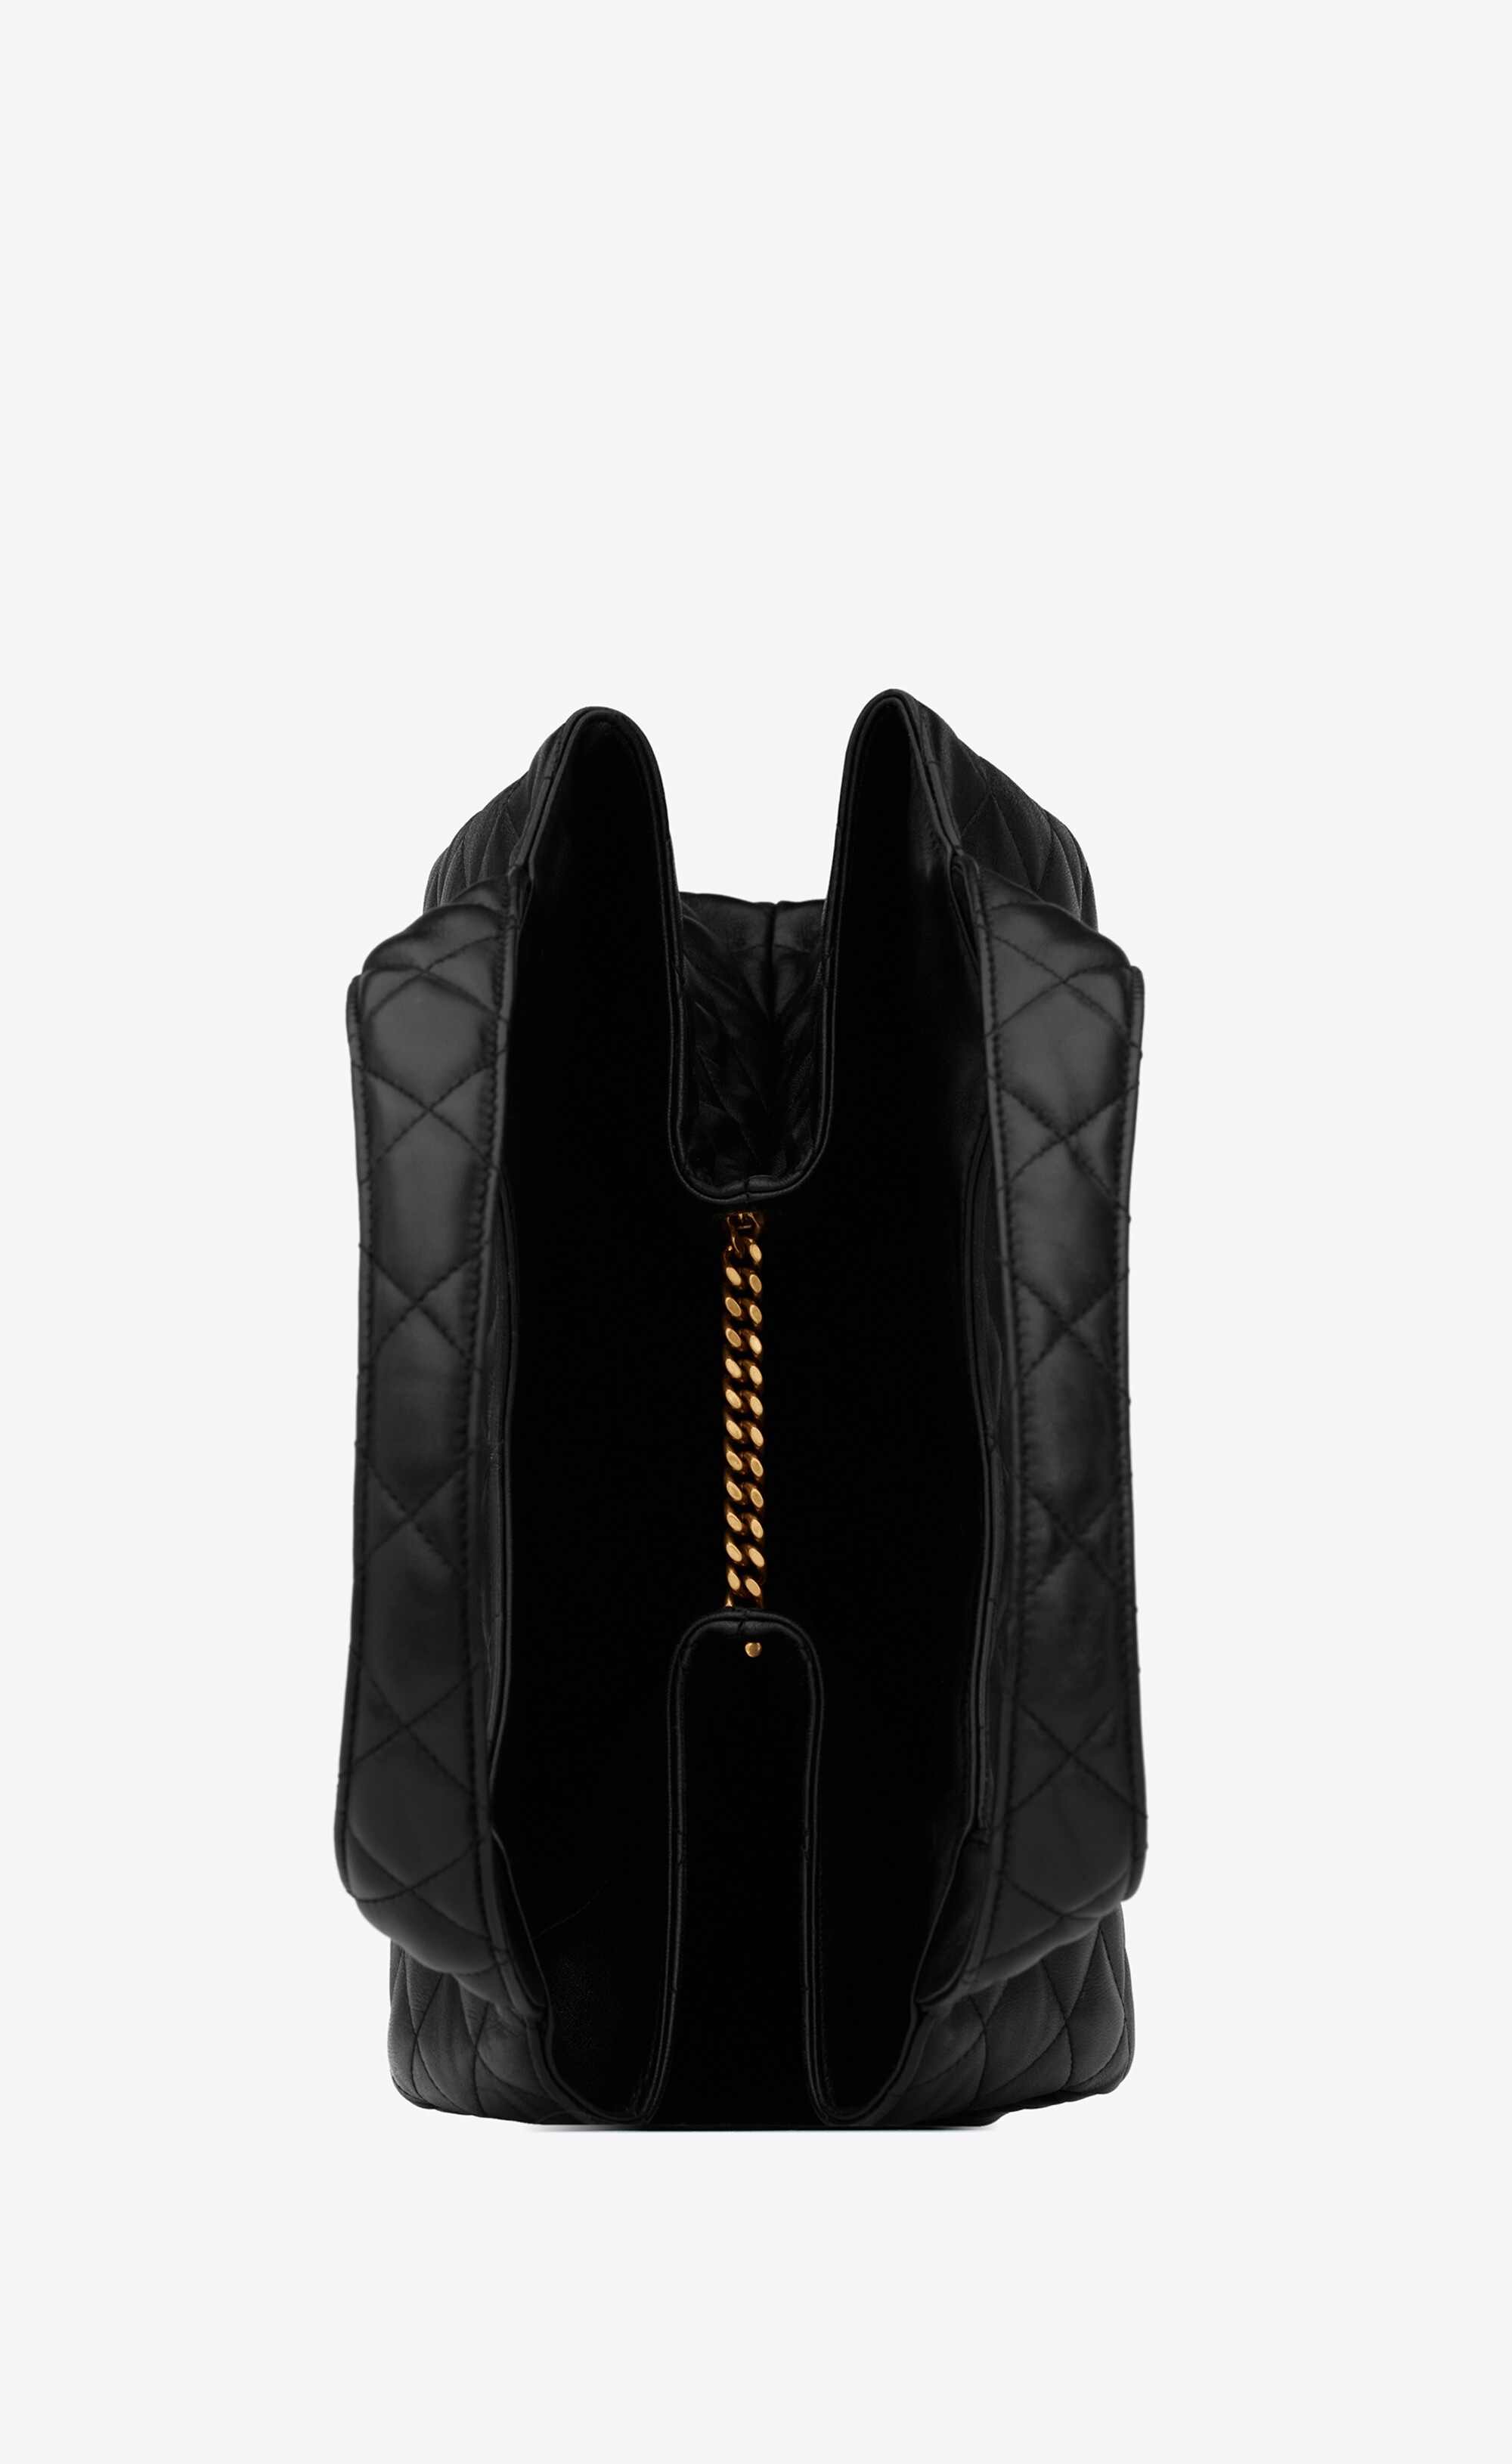 Chanel Timeless Classic Black Lambskin - Designer WishBags